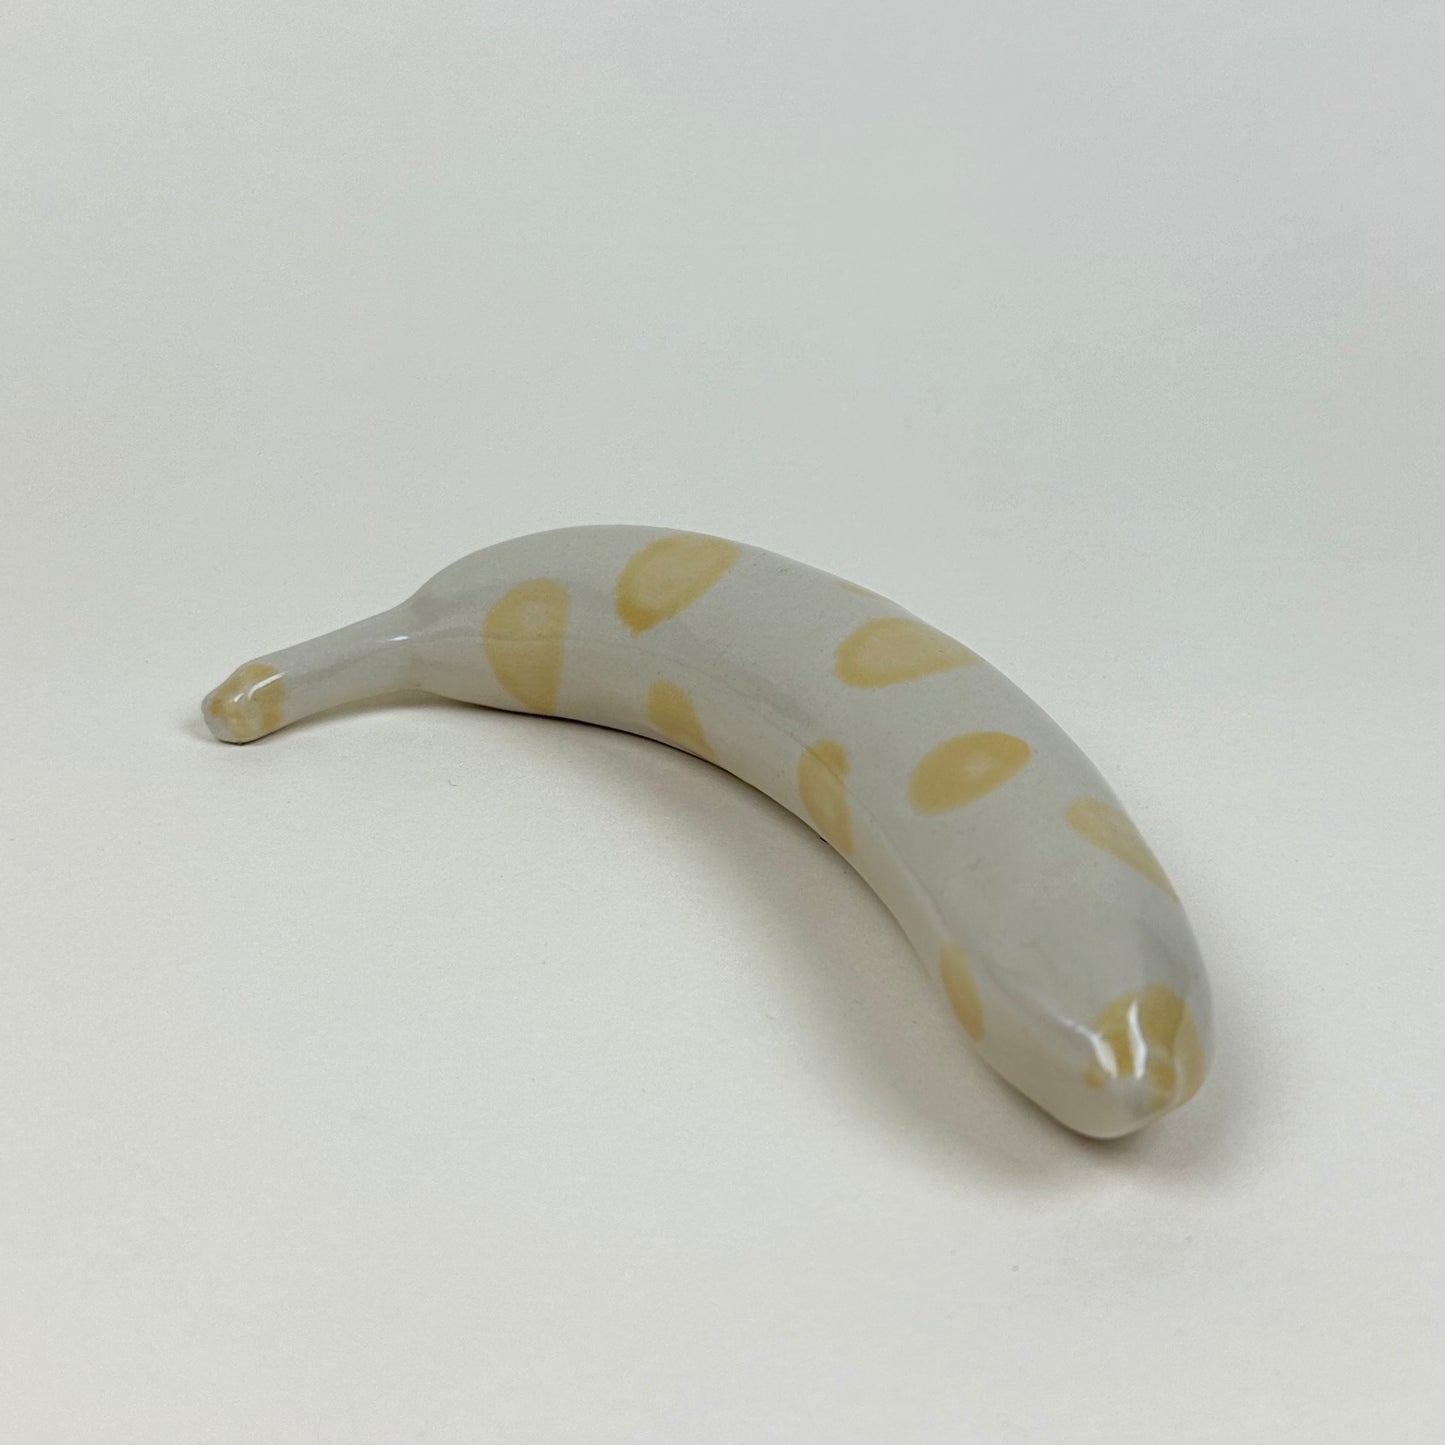 Spotted yellow and white stoneware banana by Malwina Kleparska